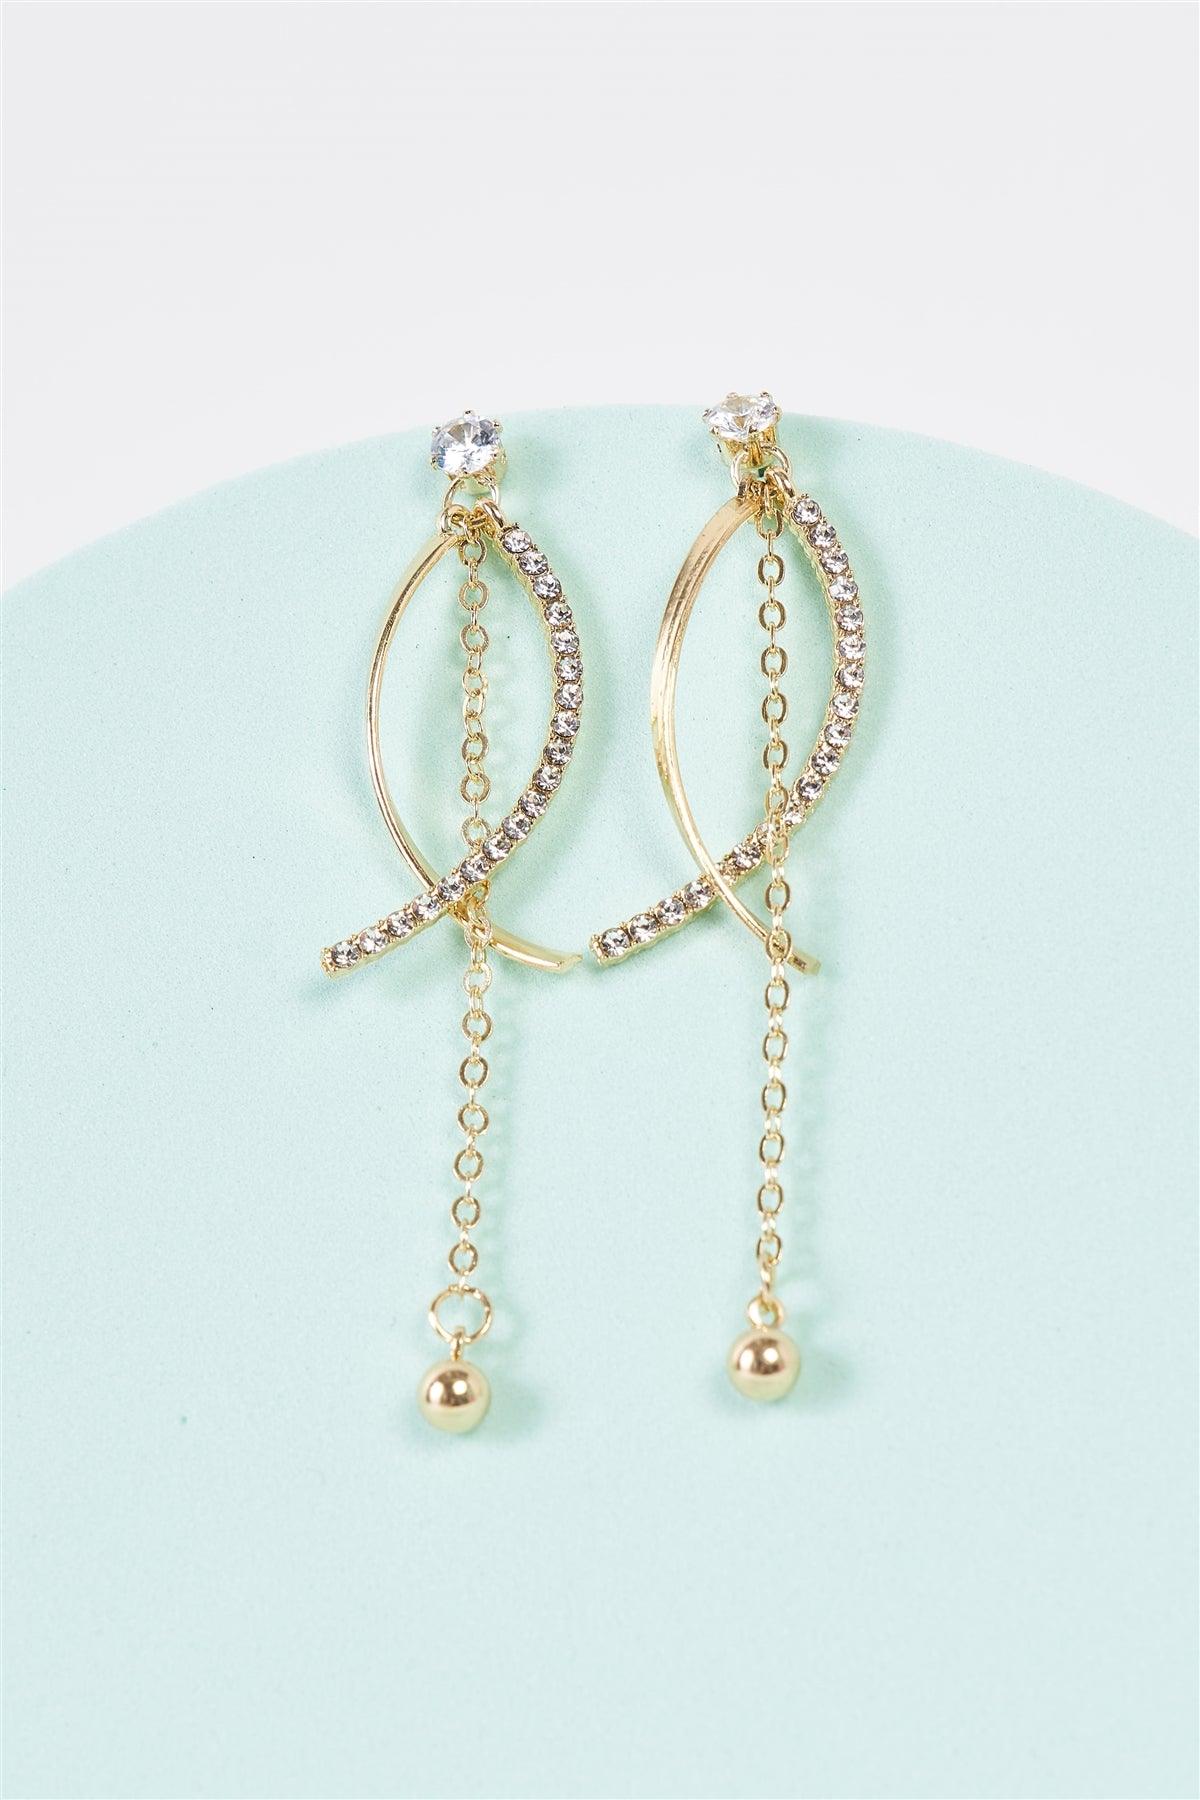 Gold & Rhinestone Long Dangle Spiral Drop Earrings /3 Pairs